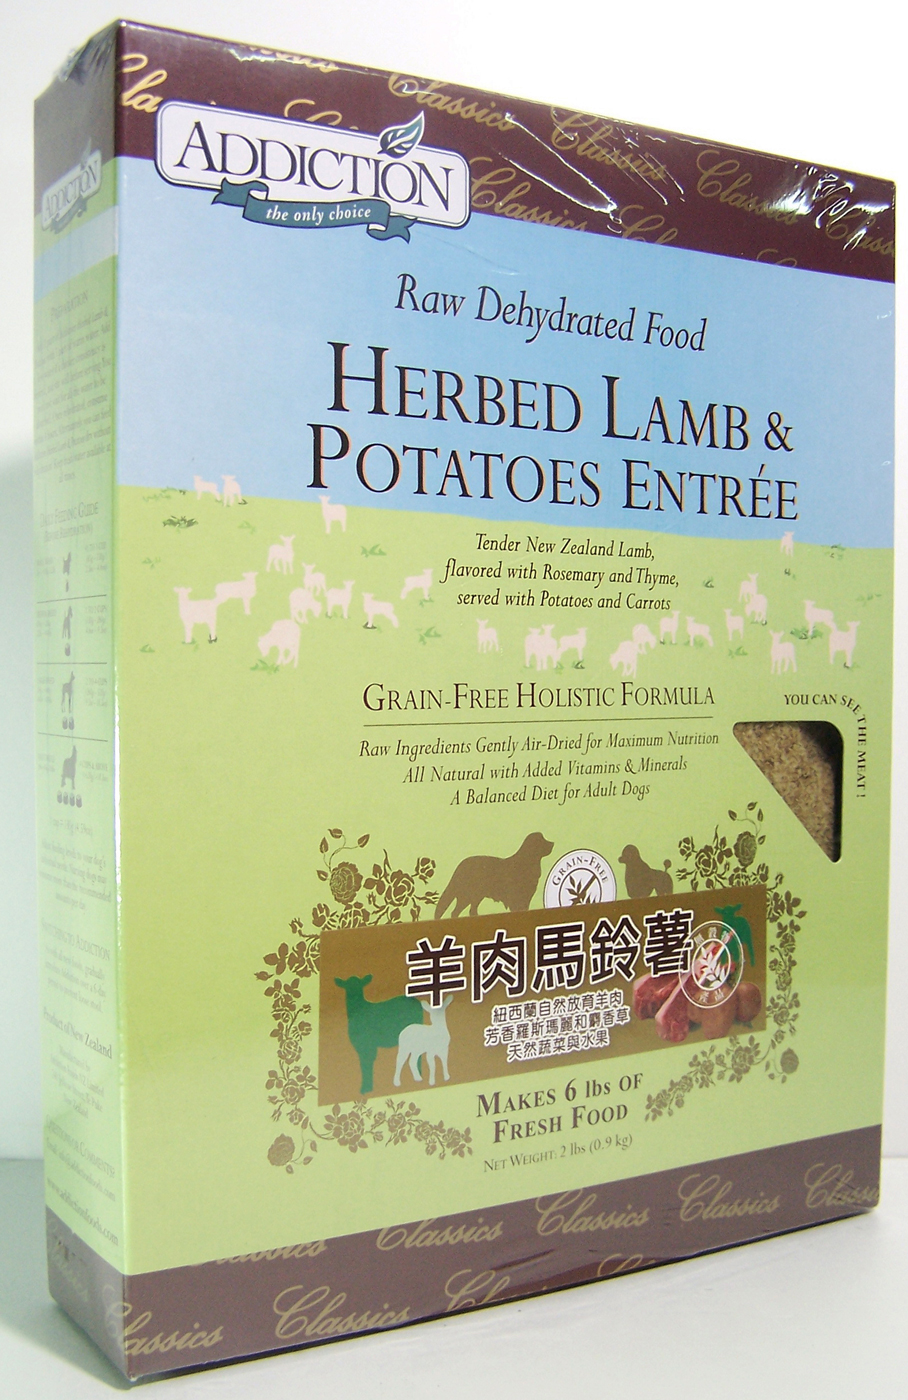 ADDICTION羊肉馬鈴薯脫水乾糧(2lbs/908g)
Herbed Lamb & Potatoes